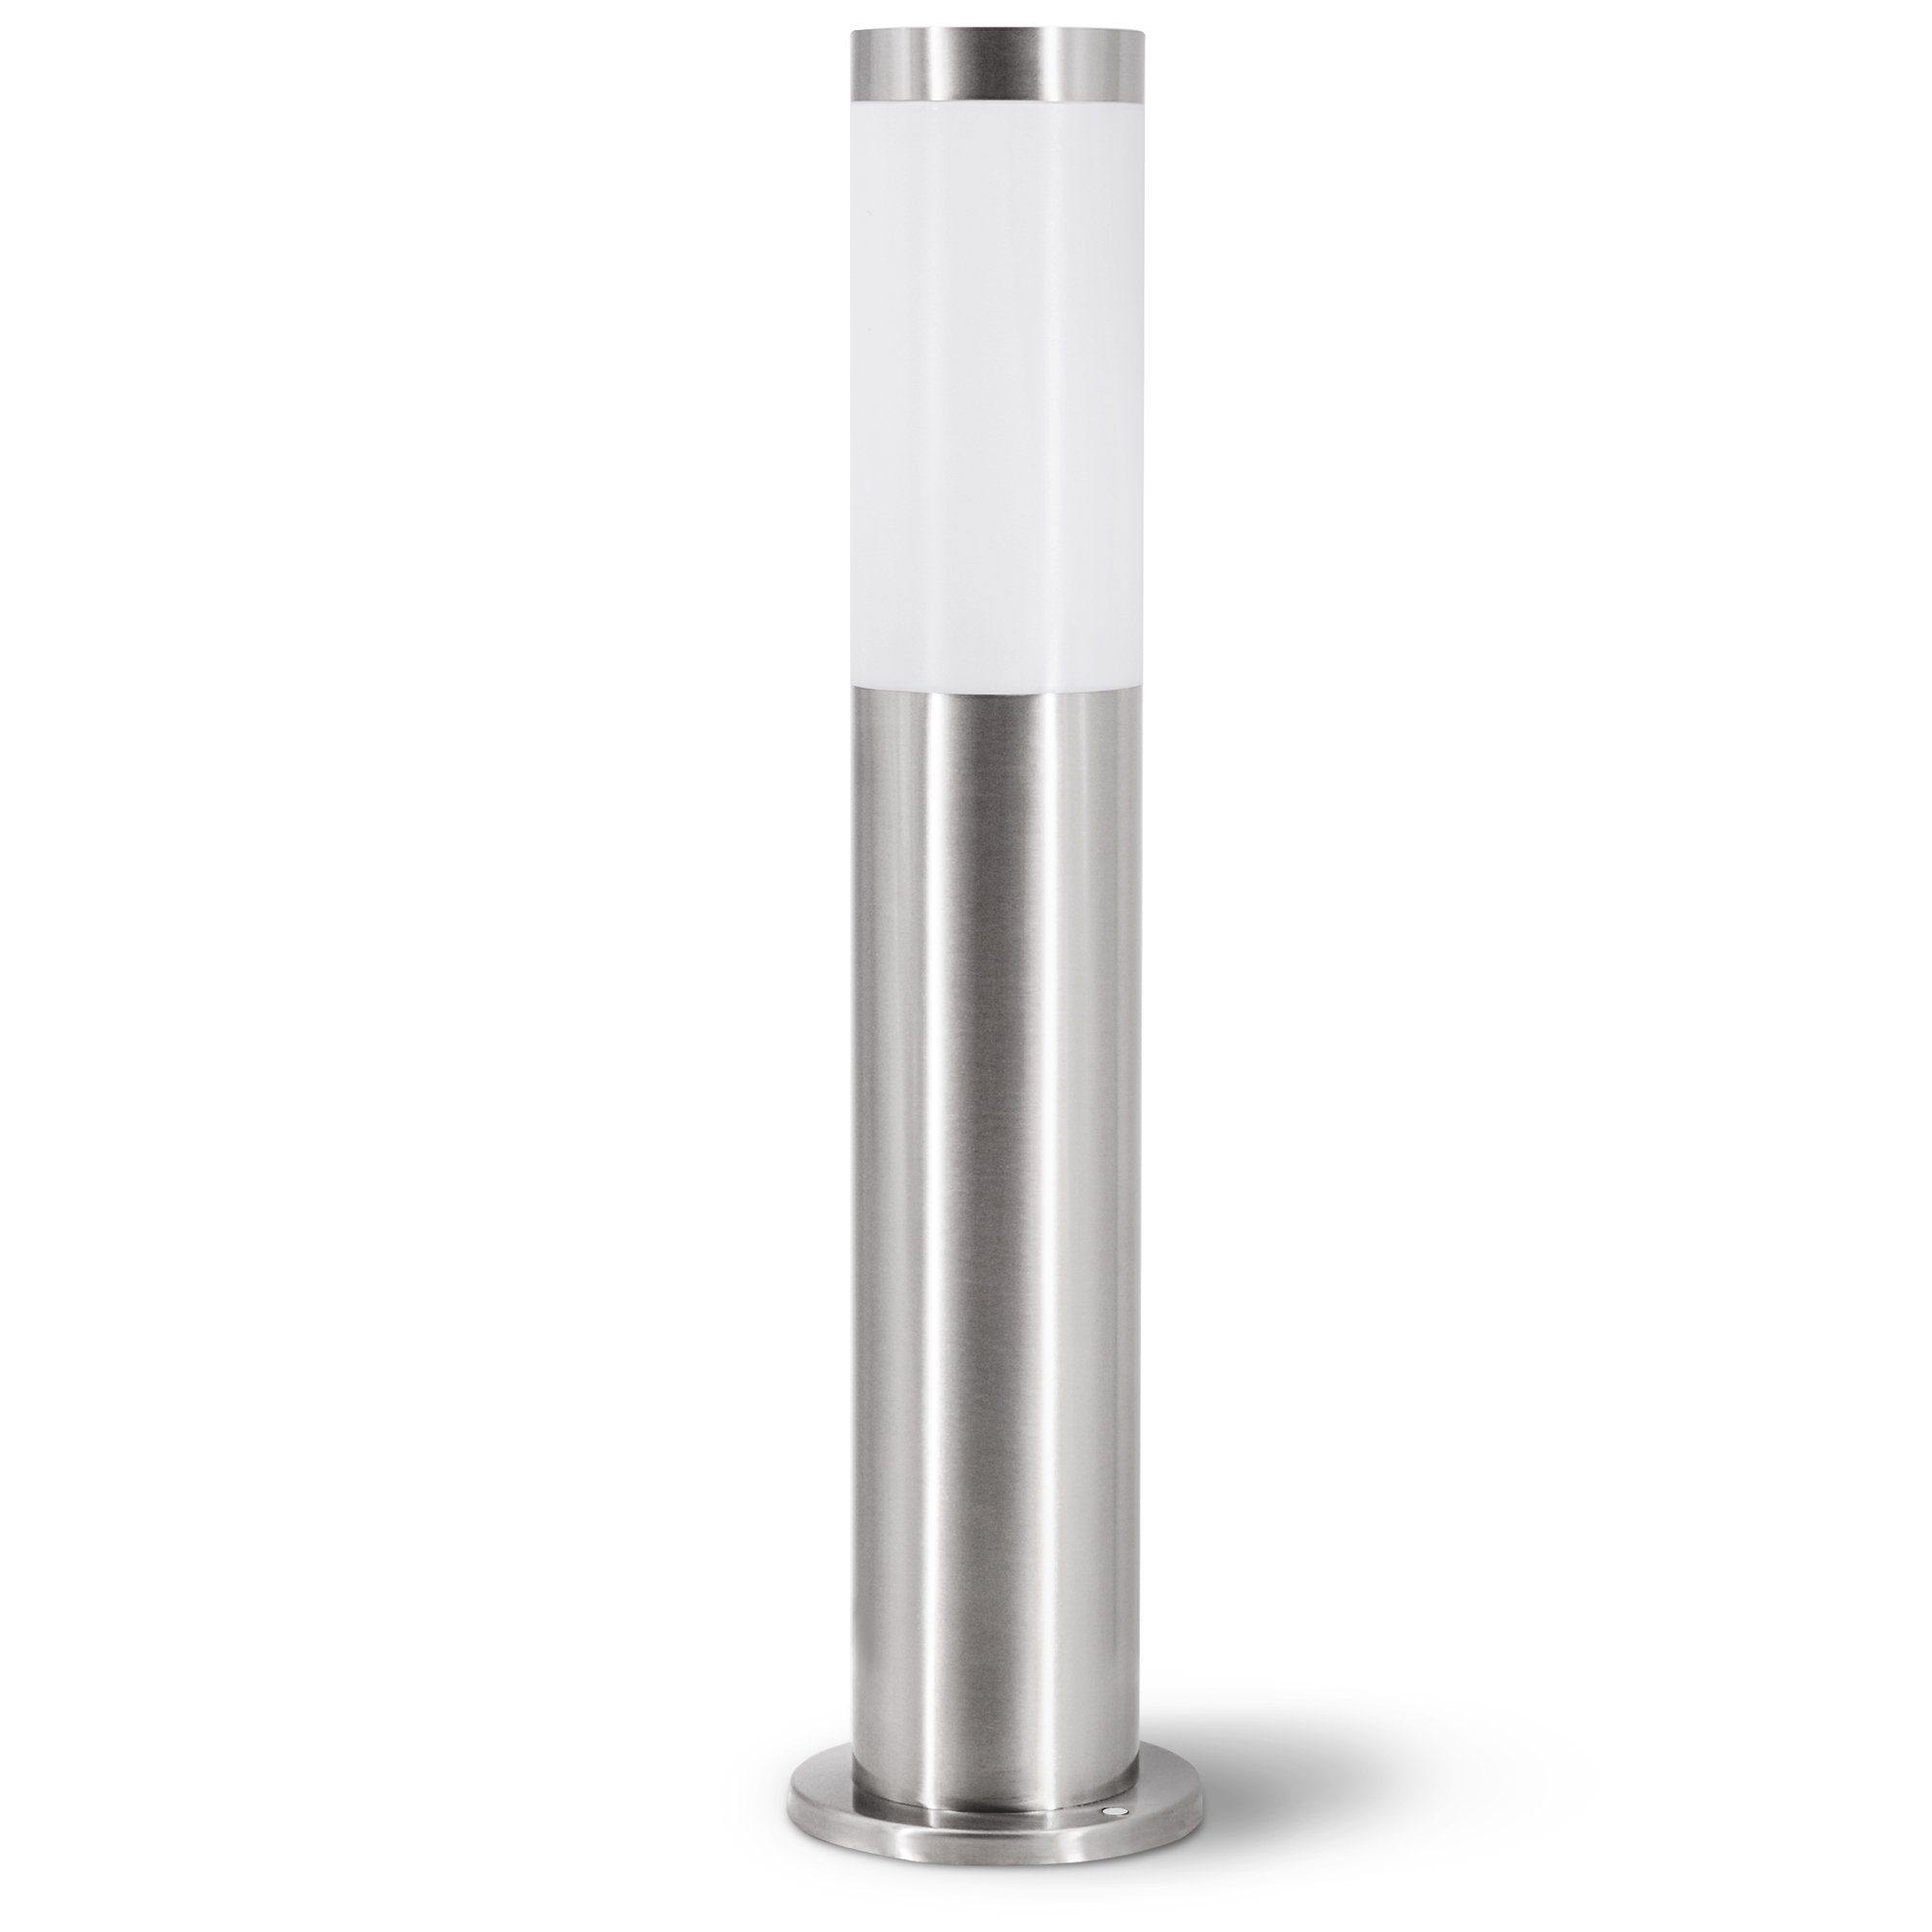 linovum LED Außen-Wandleuchte Wegeleuchte BOSEA-A 50cm, inklusive, mit E27 Pollerleuchte Leuchtmittel Sockel inklusive nicht Hoehe Leuchtmittel - nicht 1x